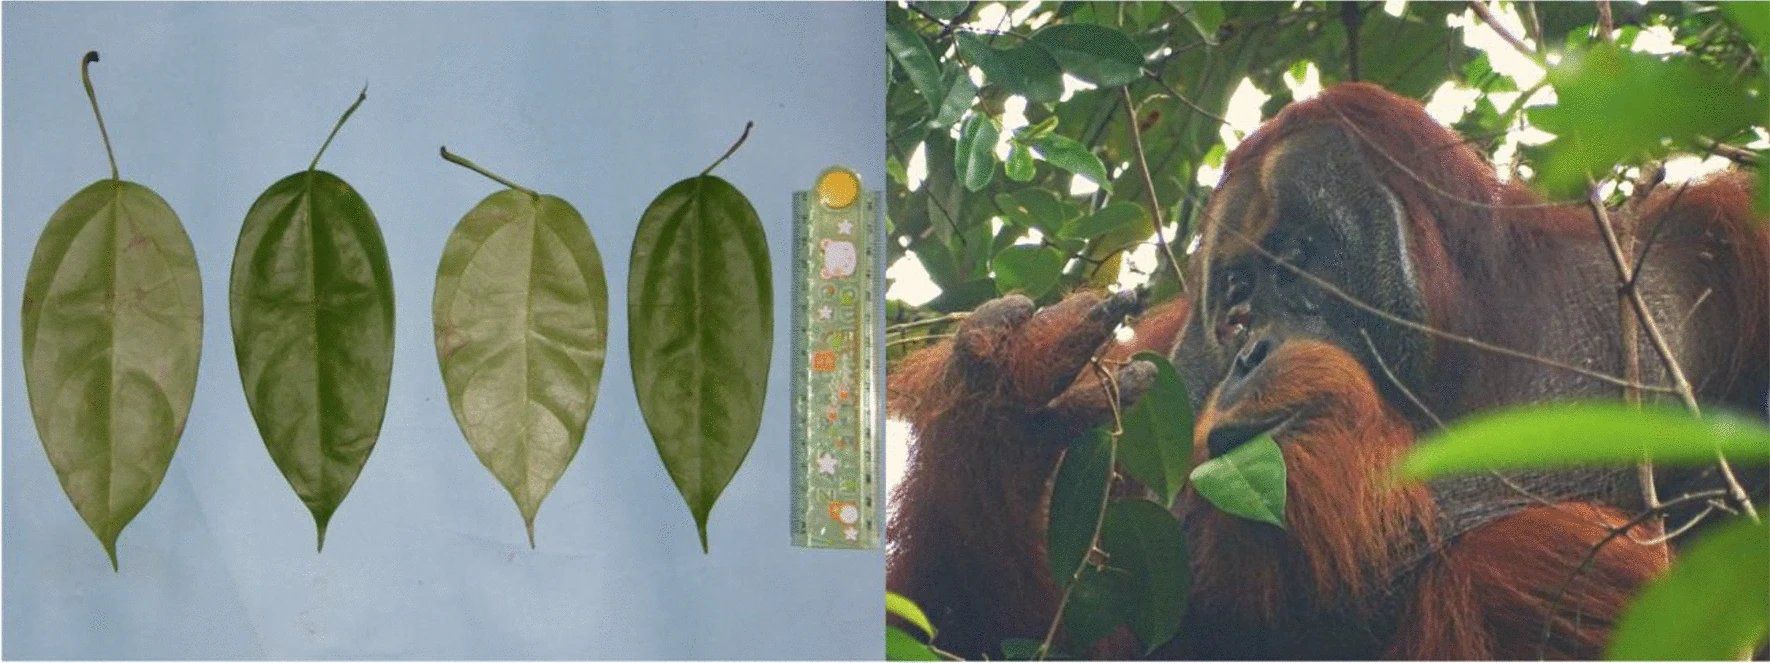 orangután se cura herida con un ungüento que él mismo produjo, revelan científicos